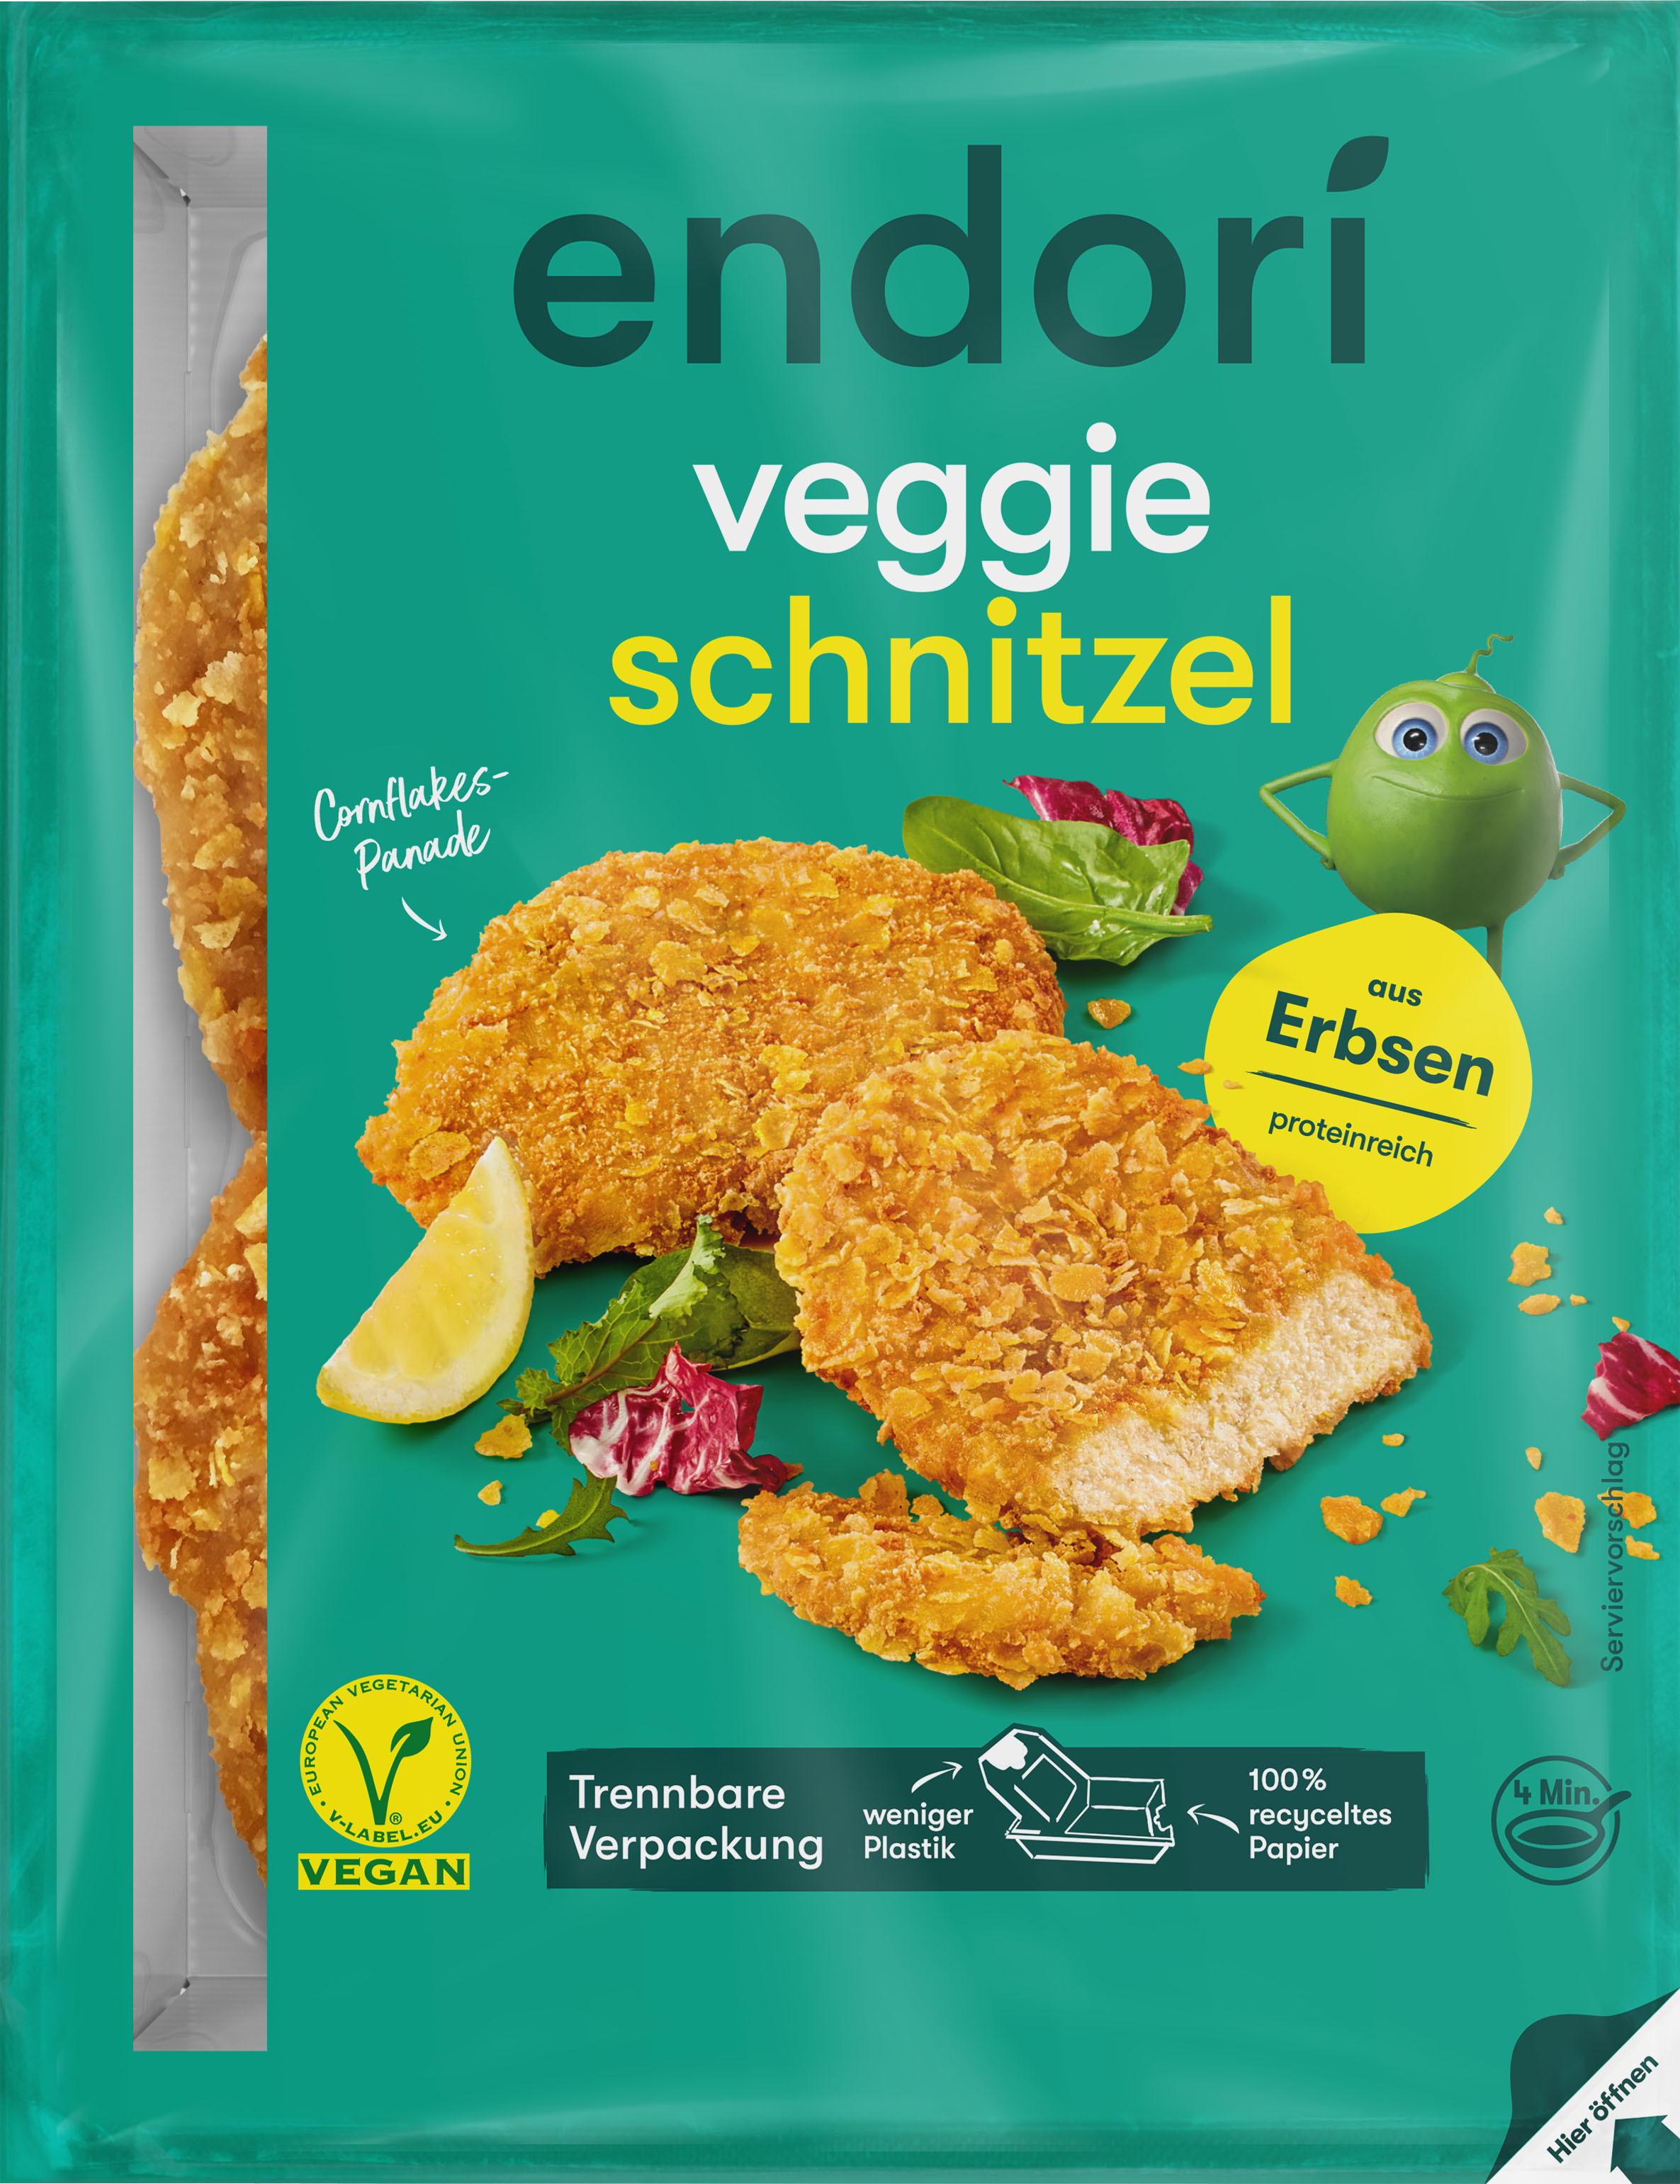 Schnitzelpfanne with endori veggie schnitzel | endori